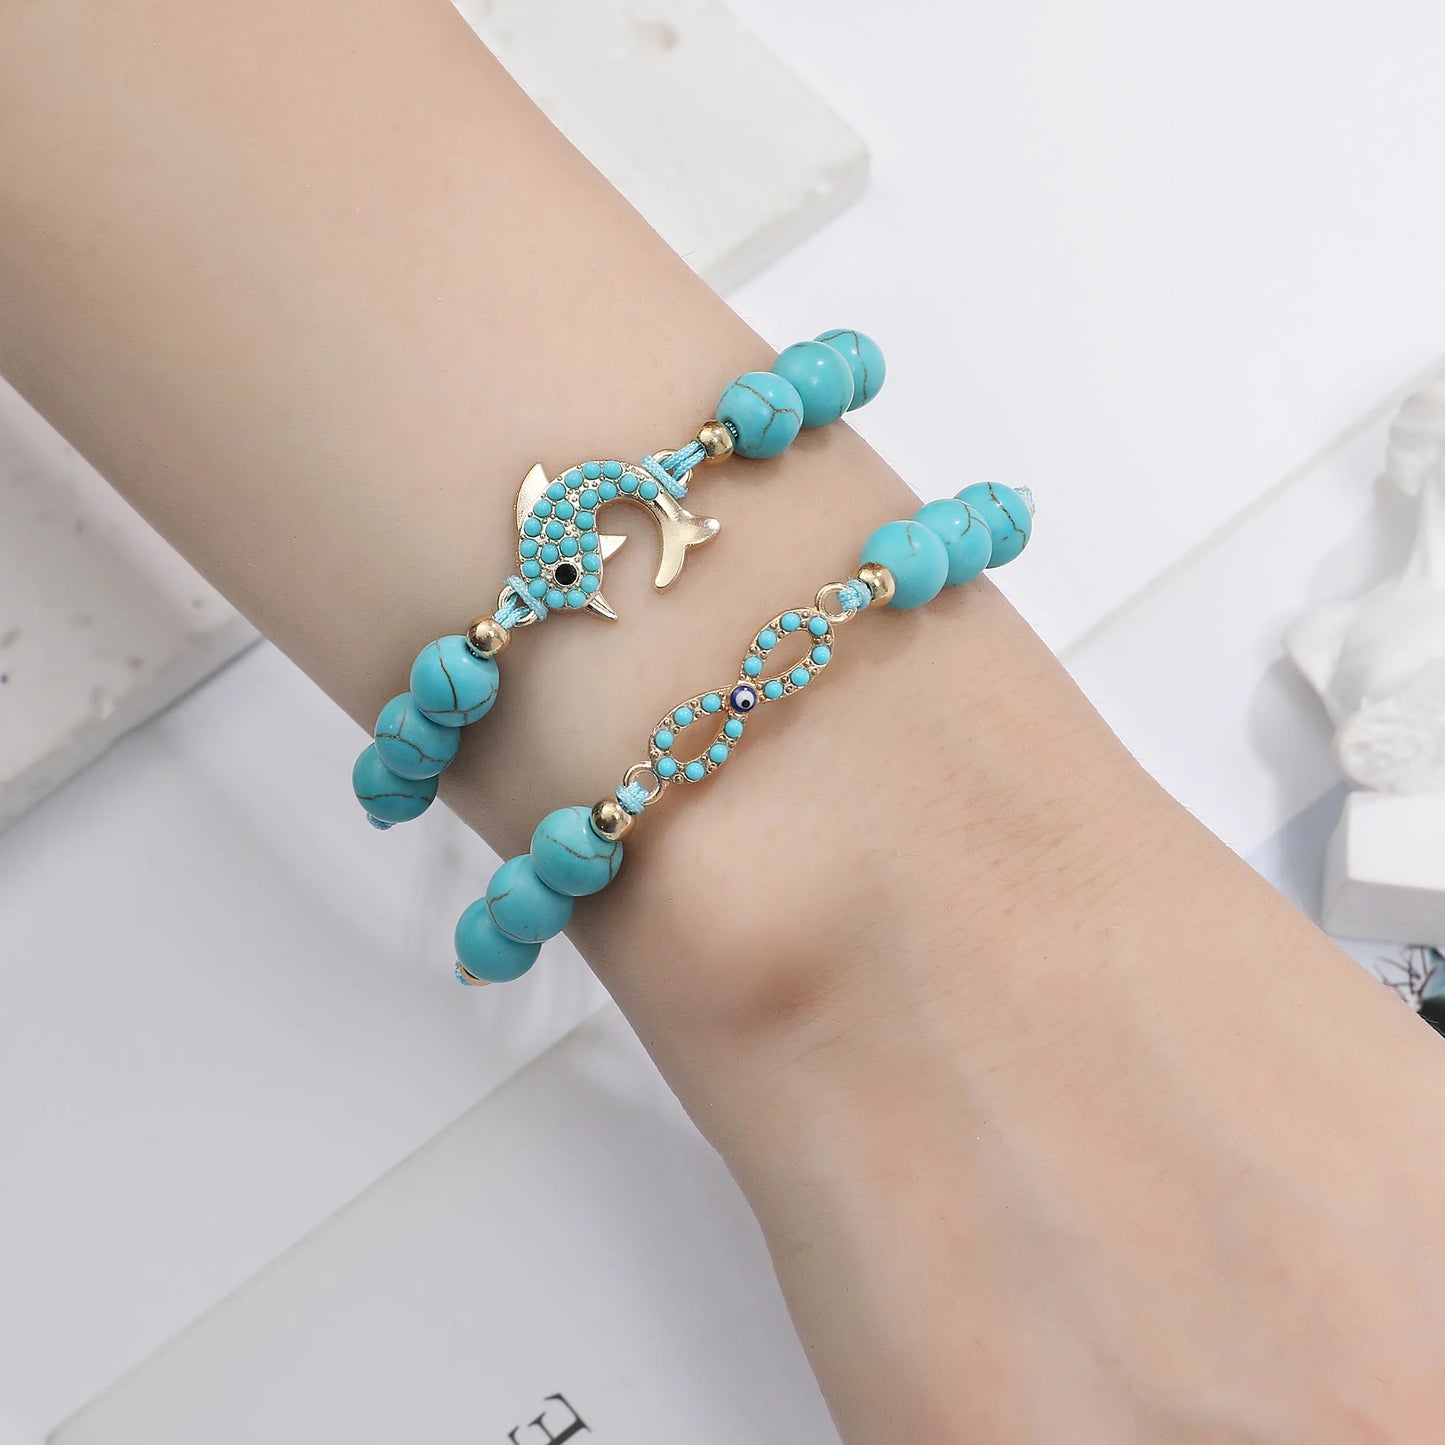 12pcs Tree of Life Fatima Hand Beads Bracelets Turquoises Adjustable Cotton Rope Chain Animal Charm Bracelet for Women Jewelry